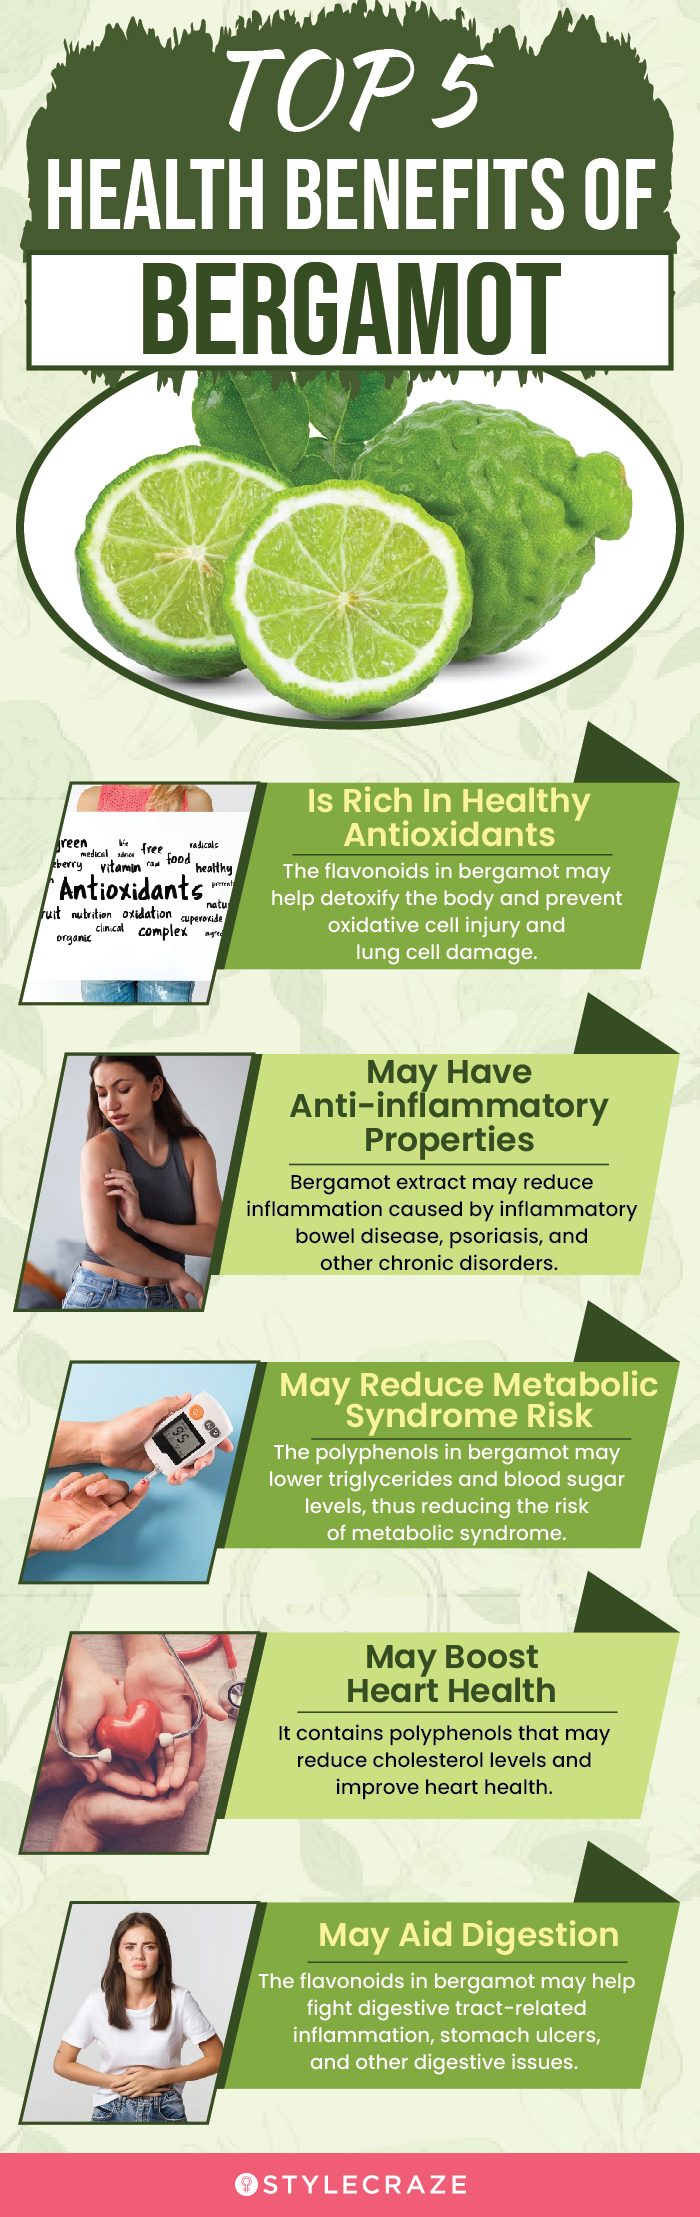 top 5 health benefits of bergamot (infographic)